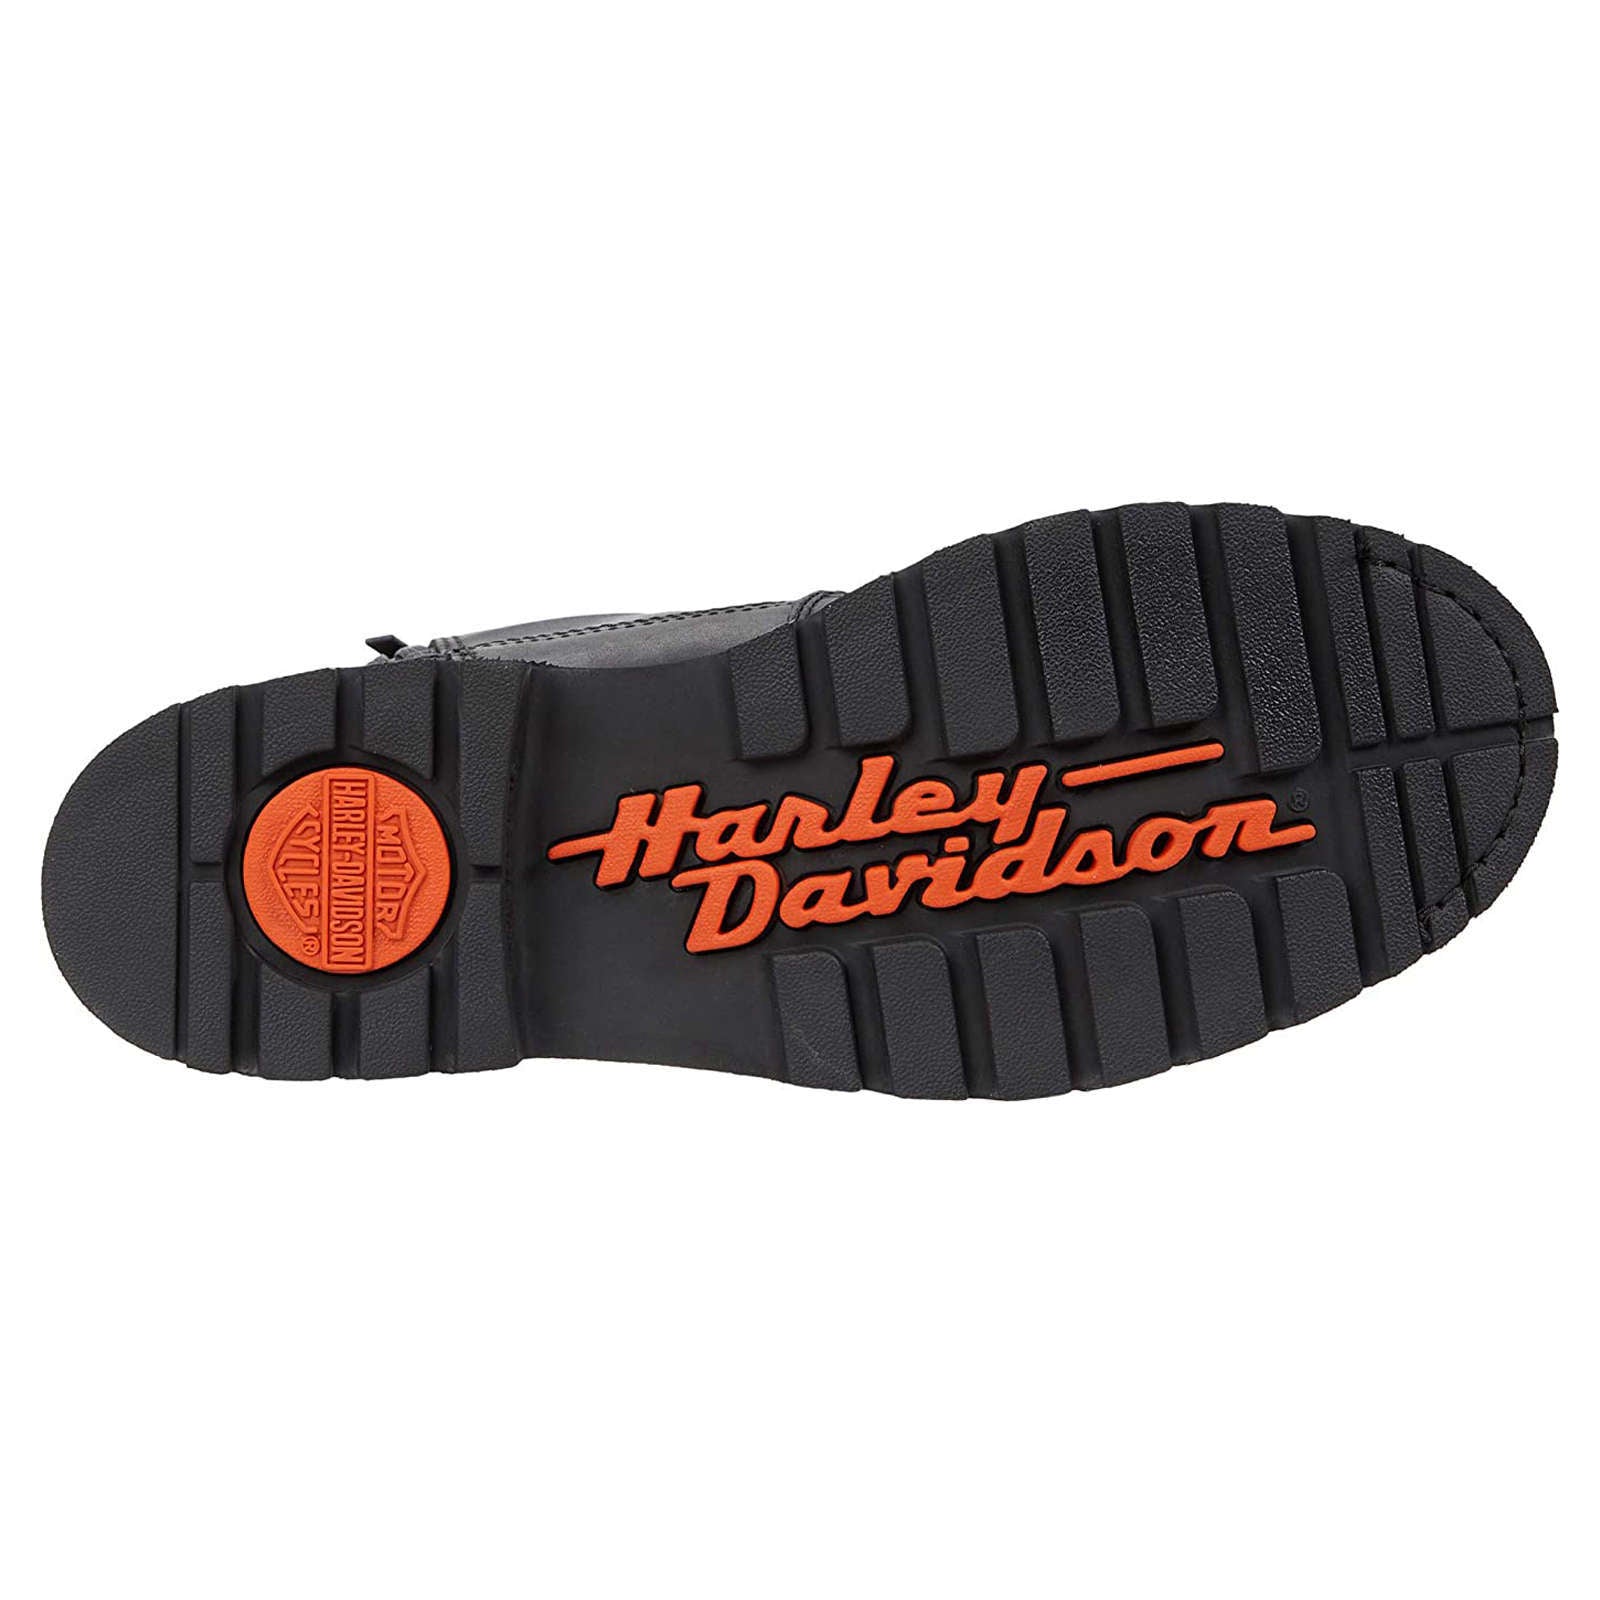 Harley Davidson Brosner Waterproof Full Grain Leather Men's Riding Boots#color_black